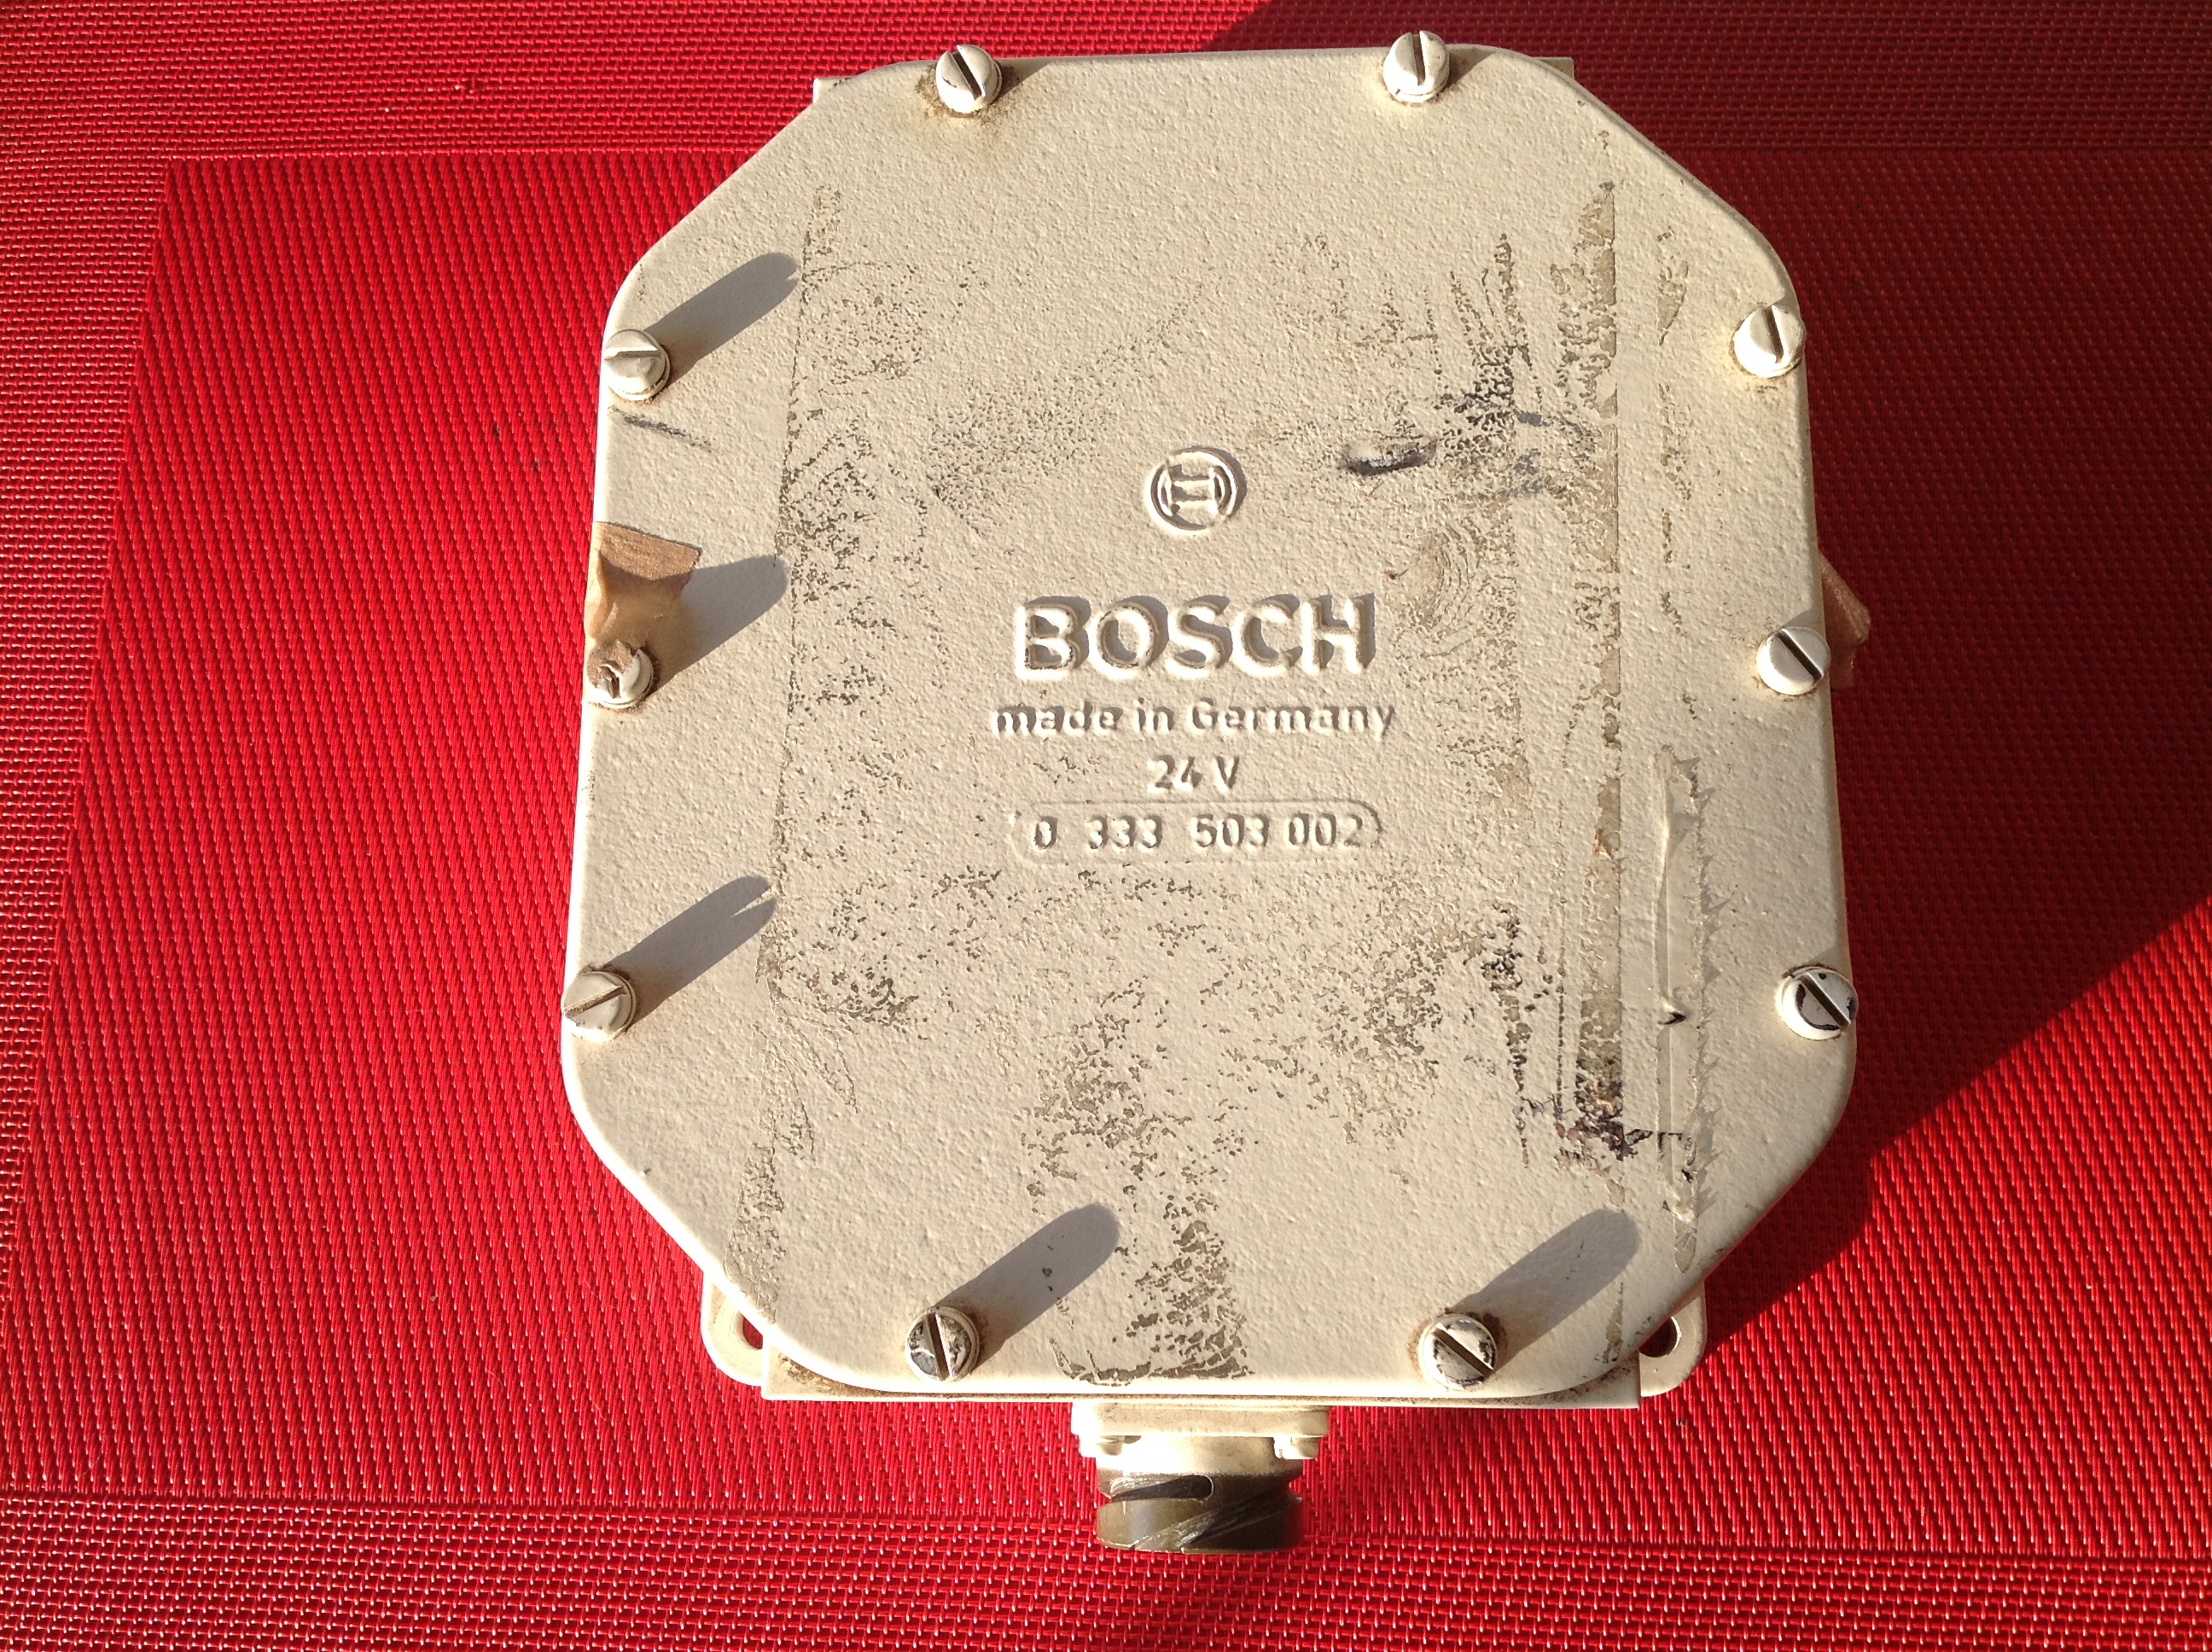 Bosch Relaisbaugruppe 24 V